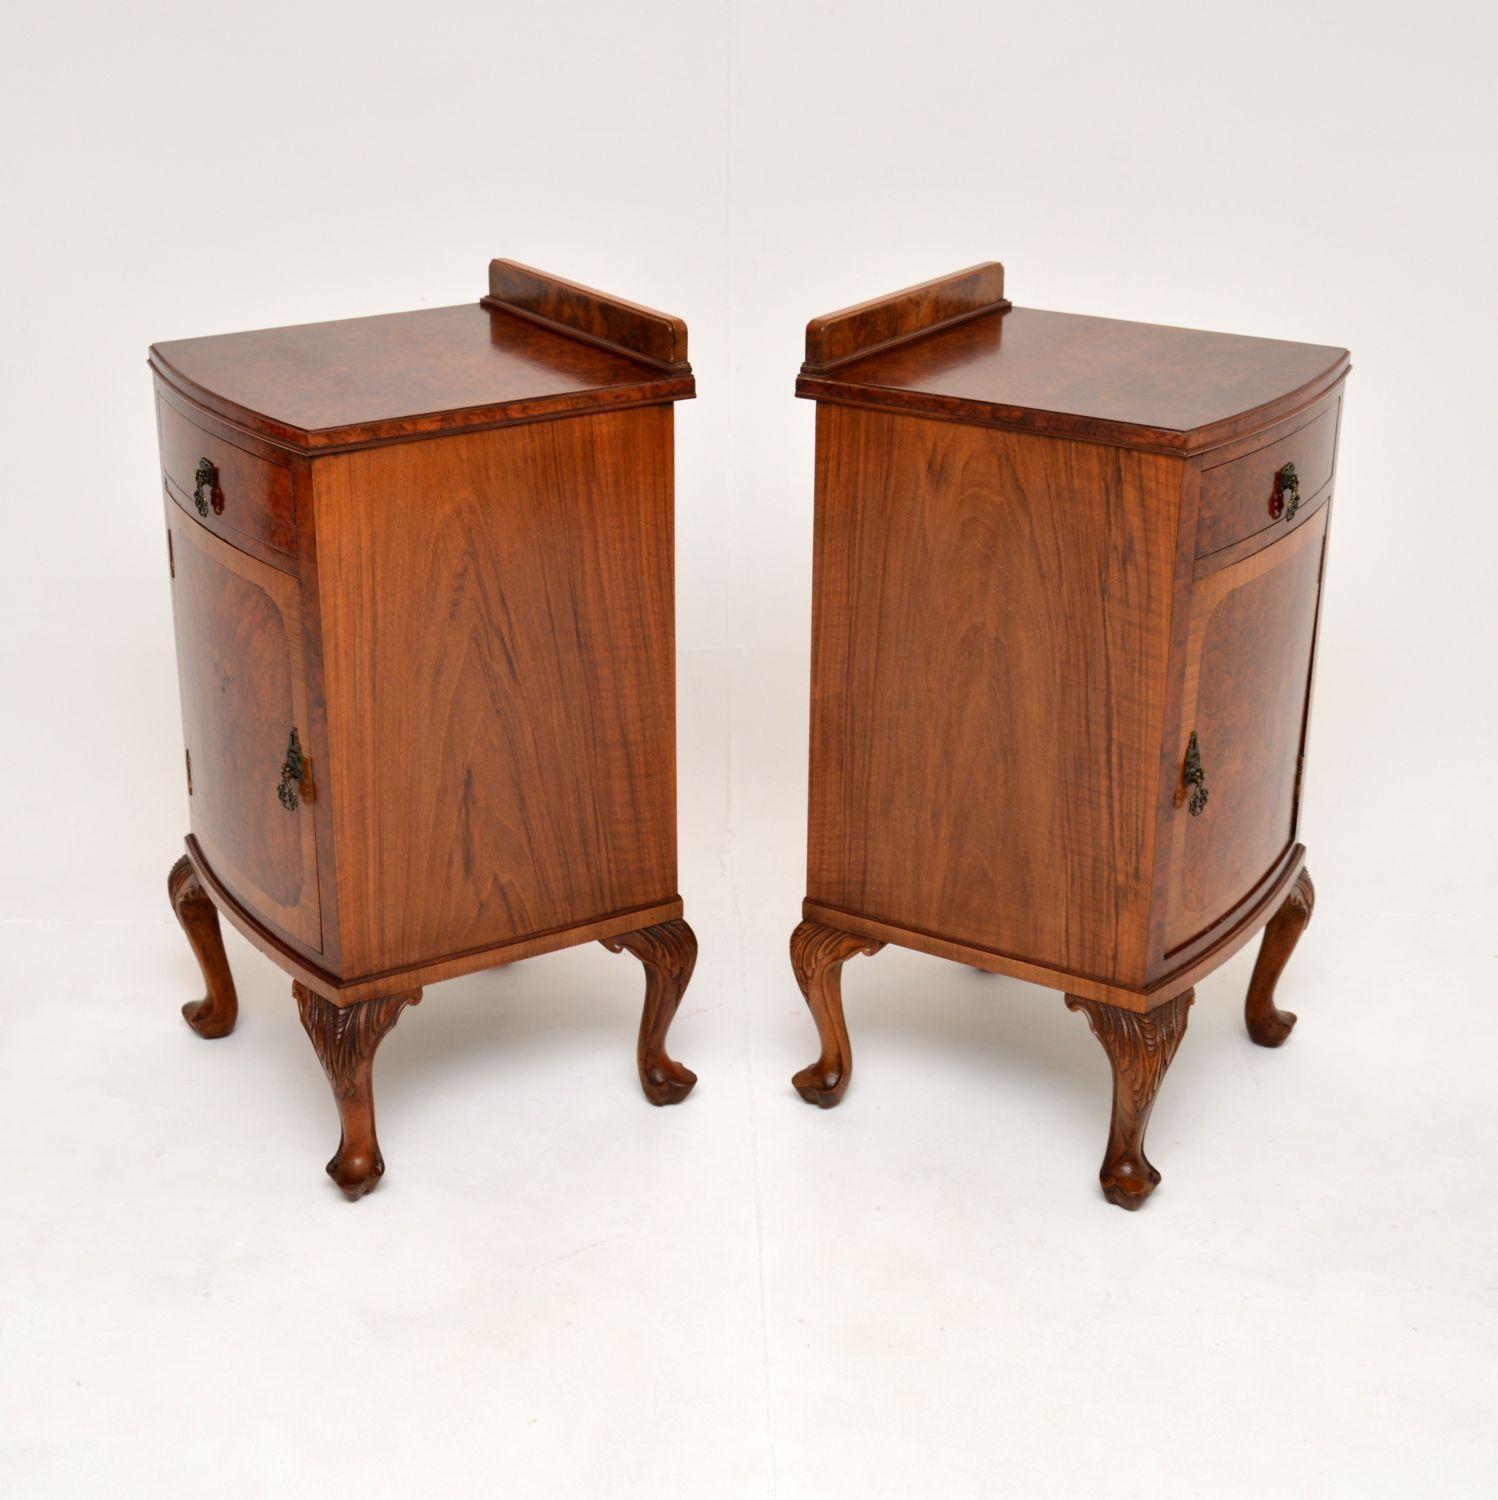 British Pair of Antique Burr Walnut Bedside Cabinets